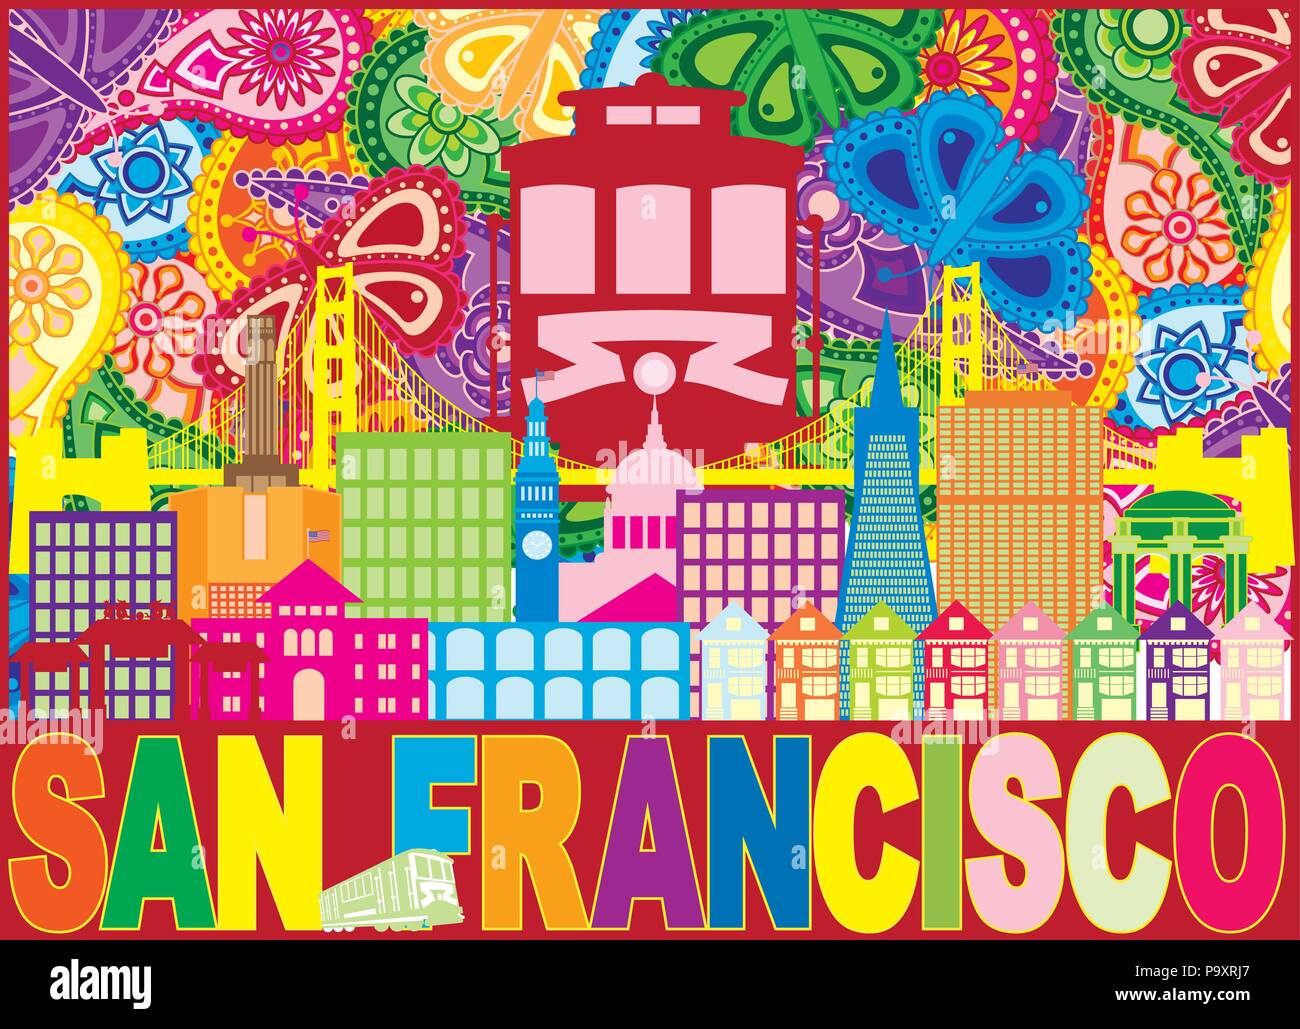 San Francisco Kalifornien City Skyline mit Trolley Sonnenstrahlen Golden Gate Bridge Text Paisley Muster Farbe Abbildung: Stock Vektor